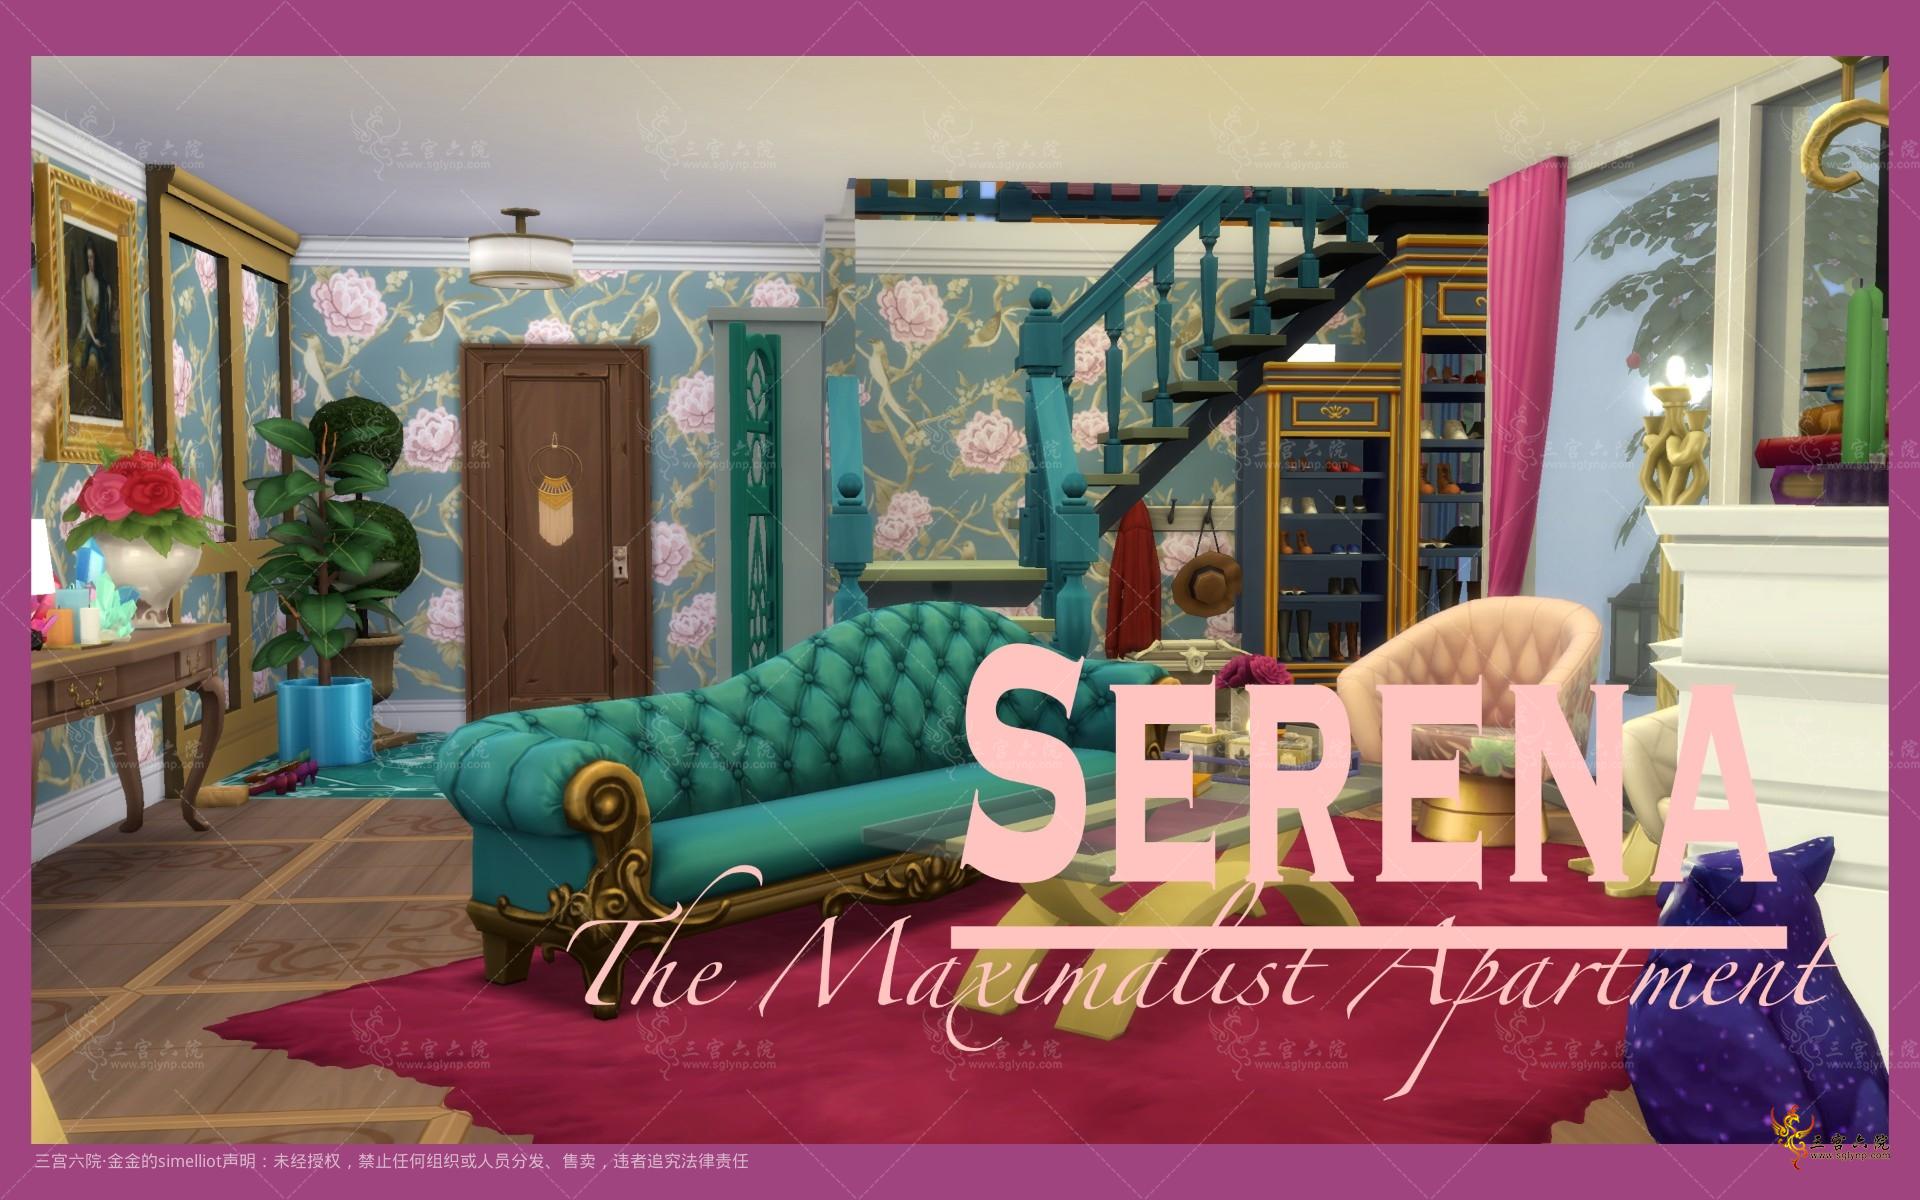 Serena maximalist apartment.jpg